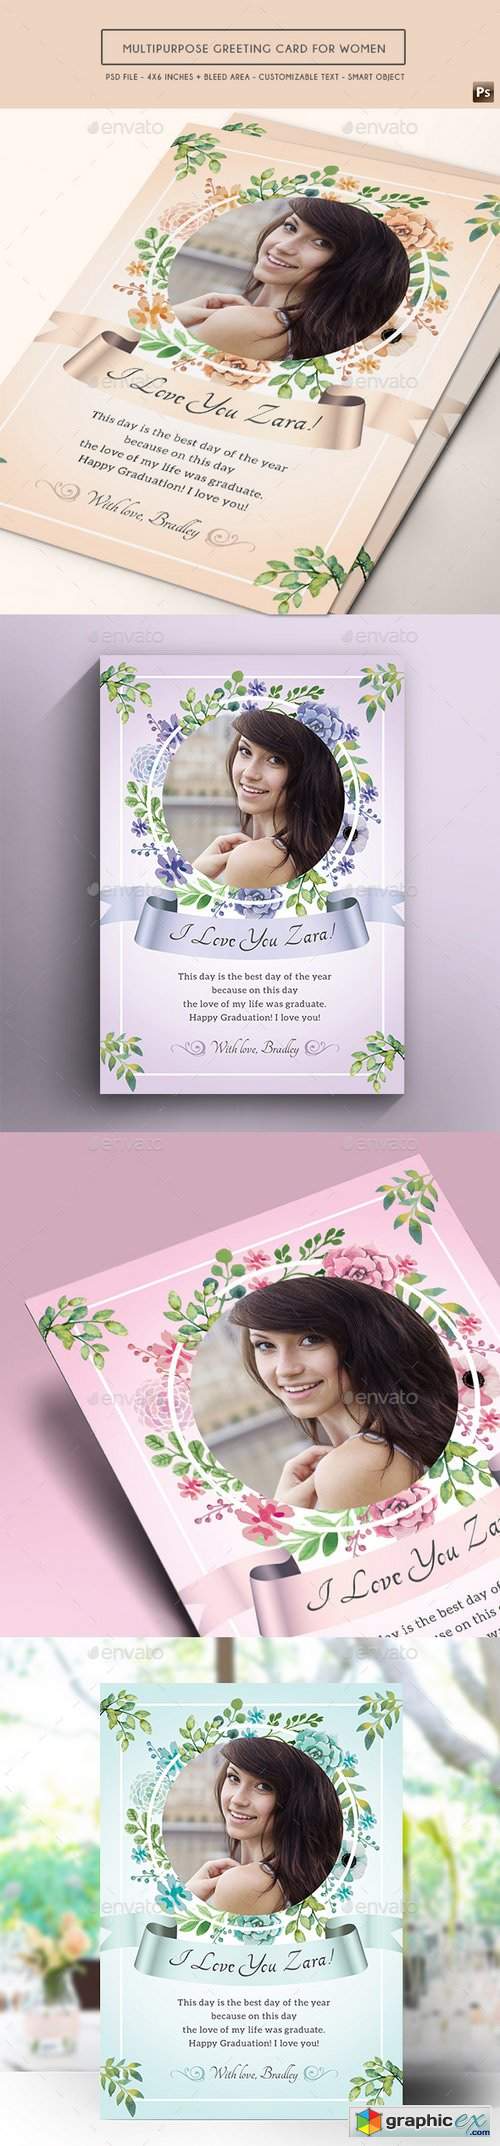 Multipurpose Greeting Card for Women